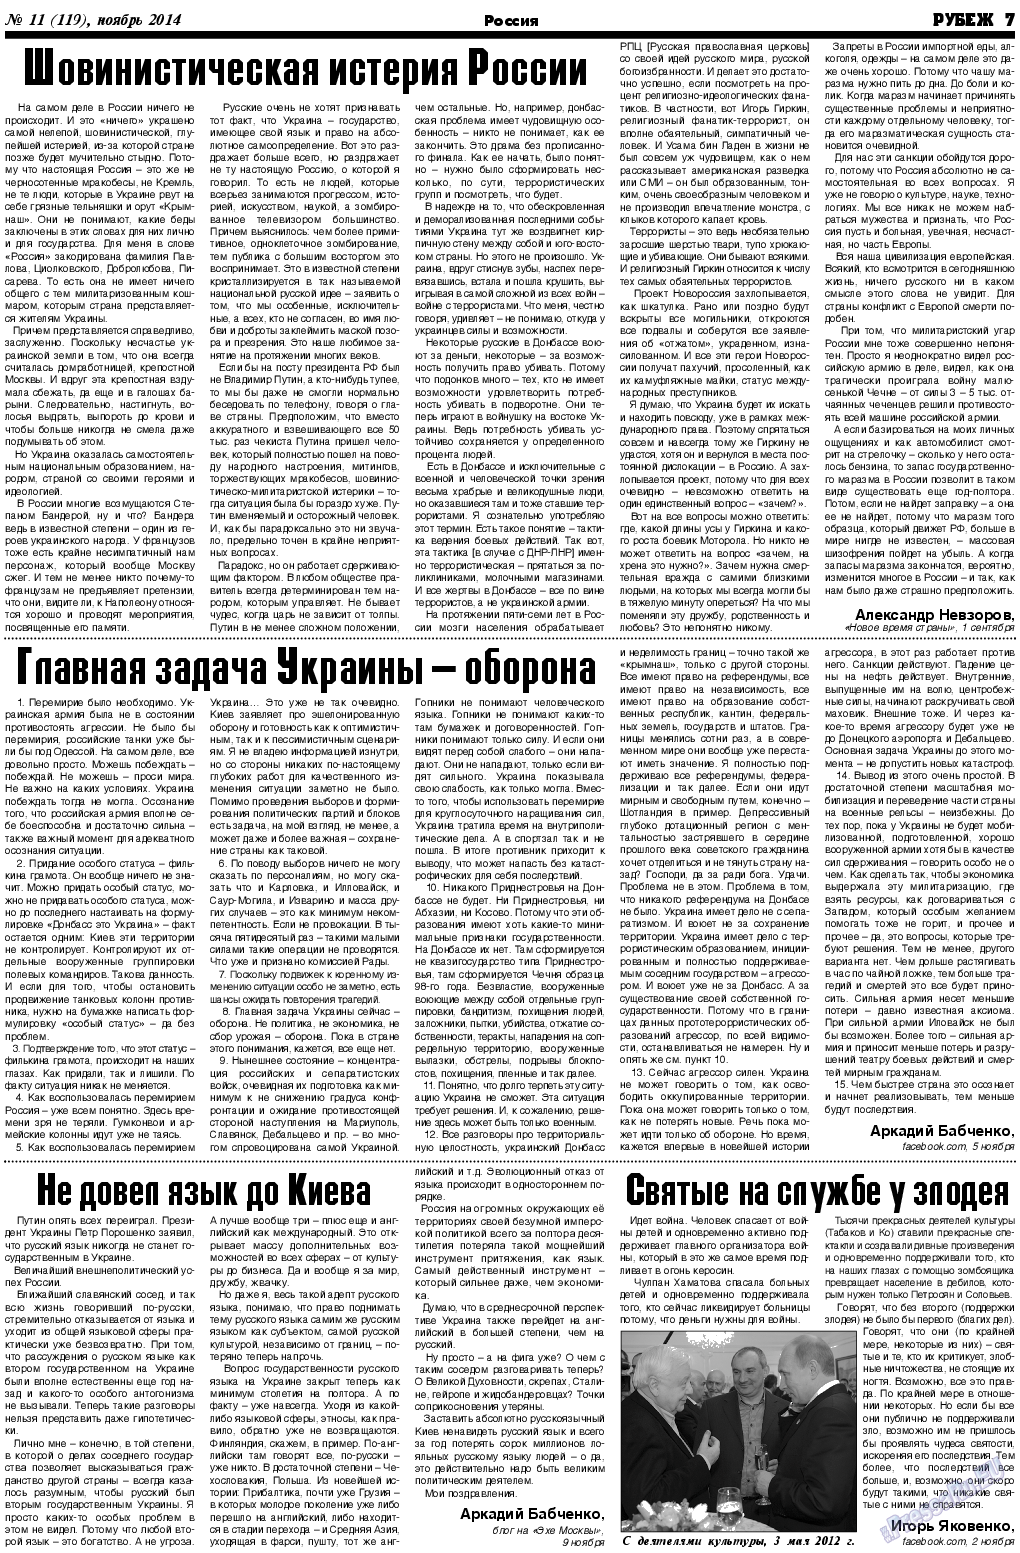 Рубеж, газета. 2014 №11 стр.7